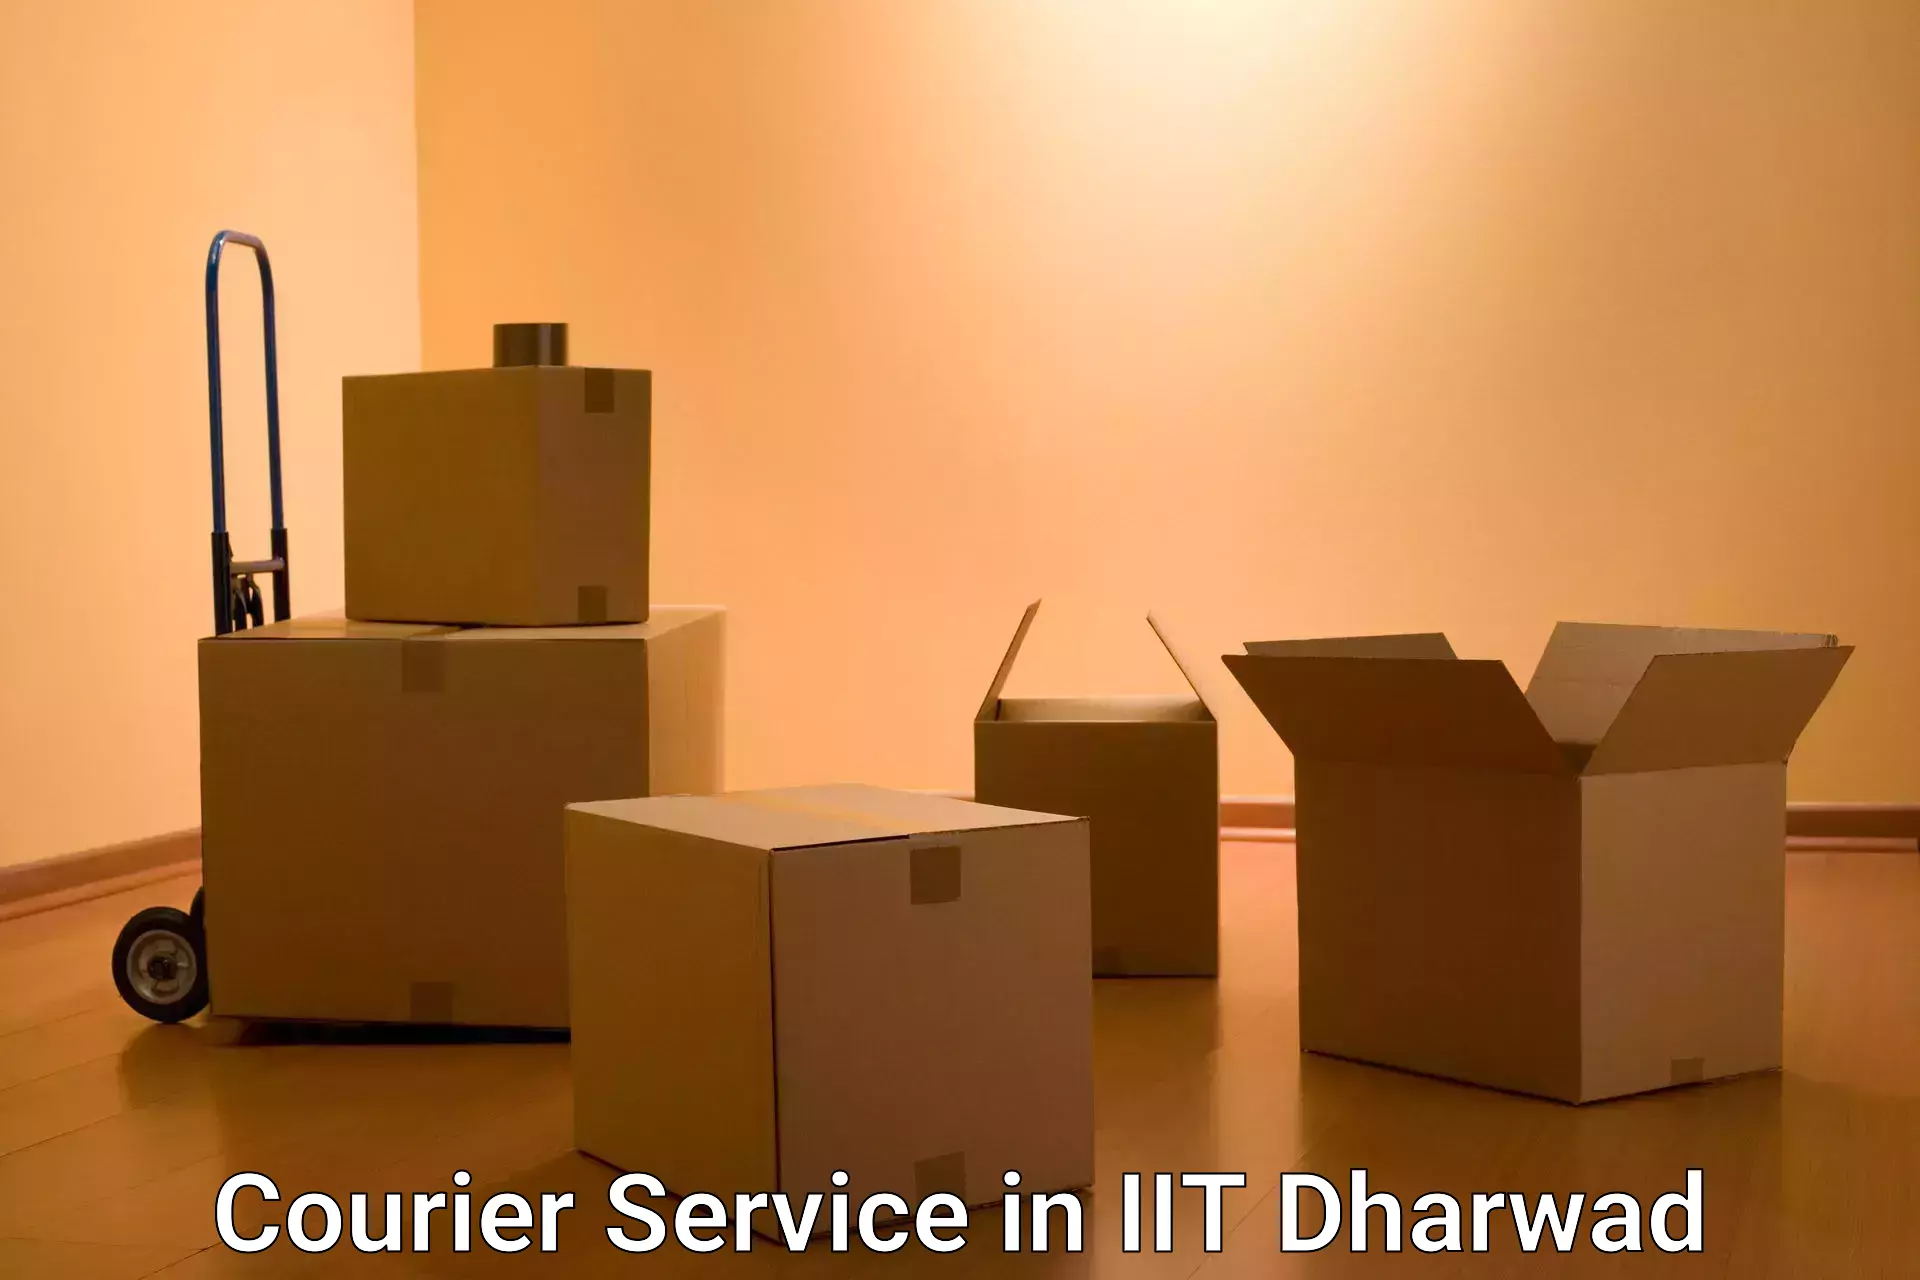 Modern delivery methods in IIT Dharwad